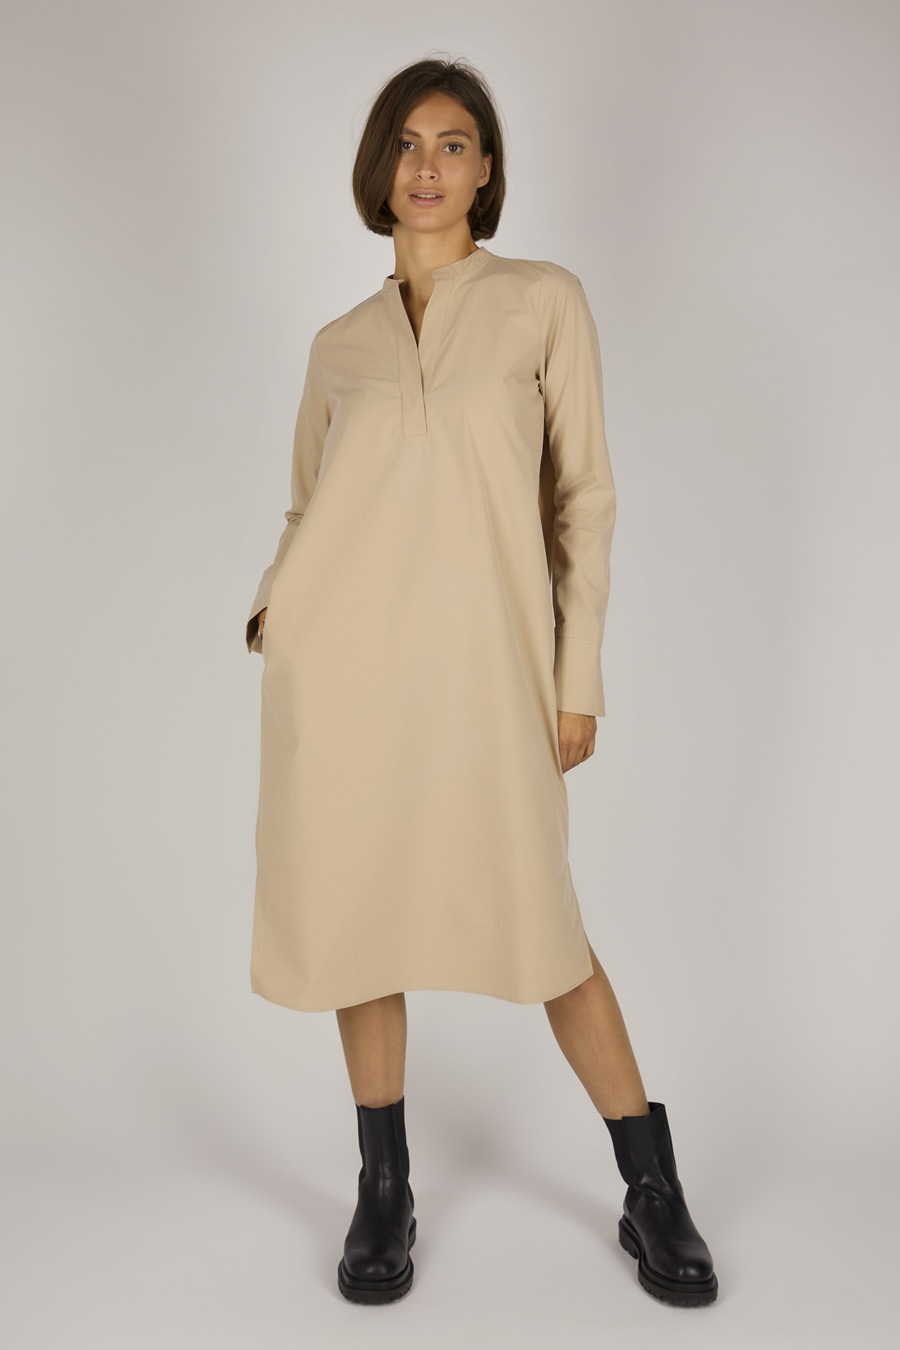 ETTA – Calf-length cotton dress – Color: Trench